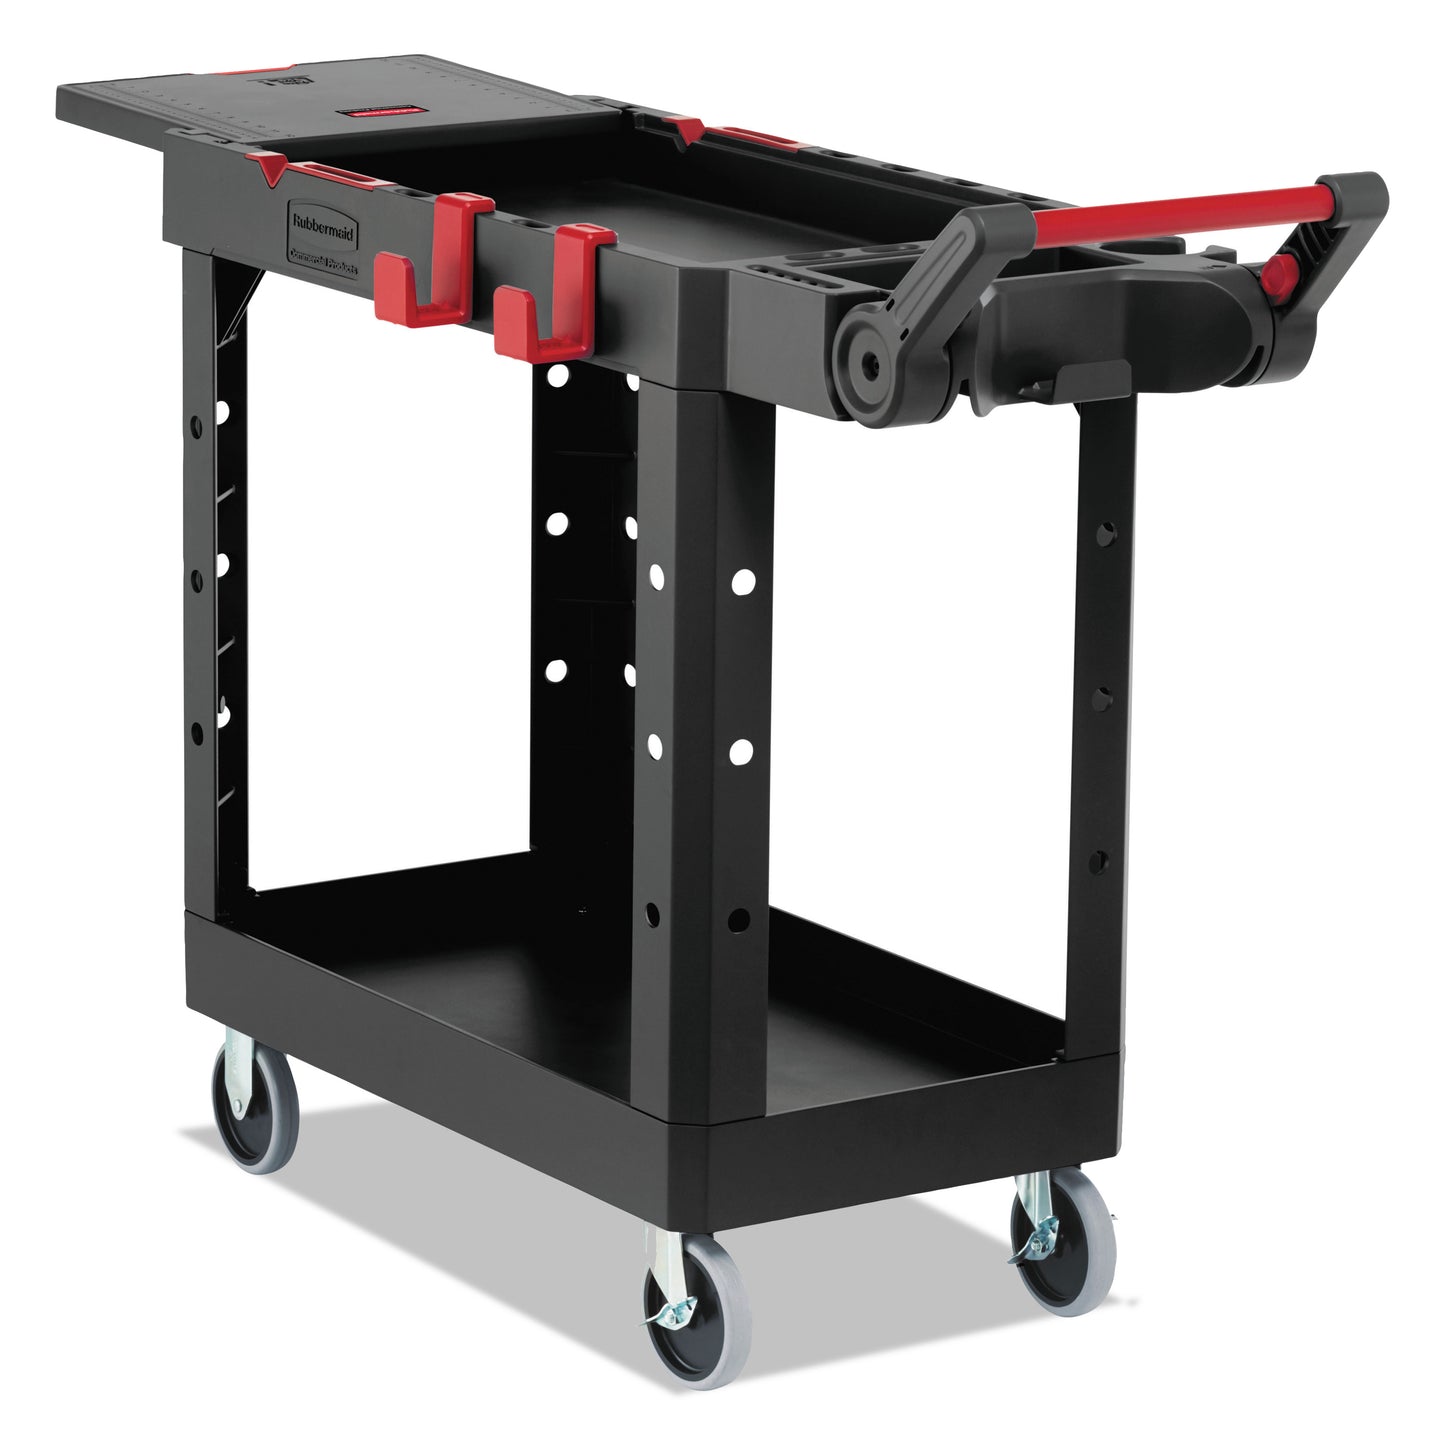 Structural Foam Adaptable-Design Utility Cart with Deep Lipped Plastic Shelves, Ergonomic, 500 lb